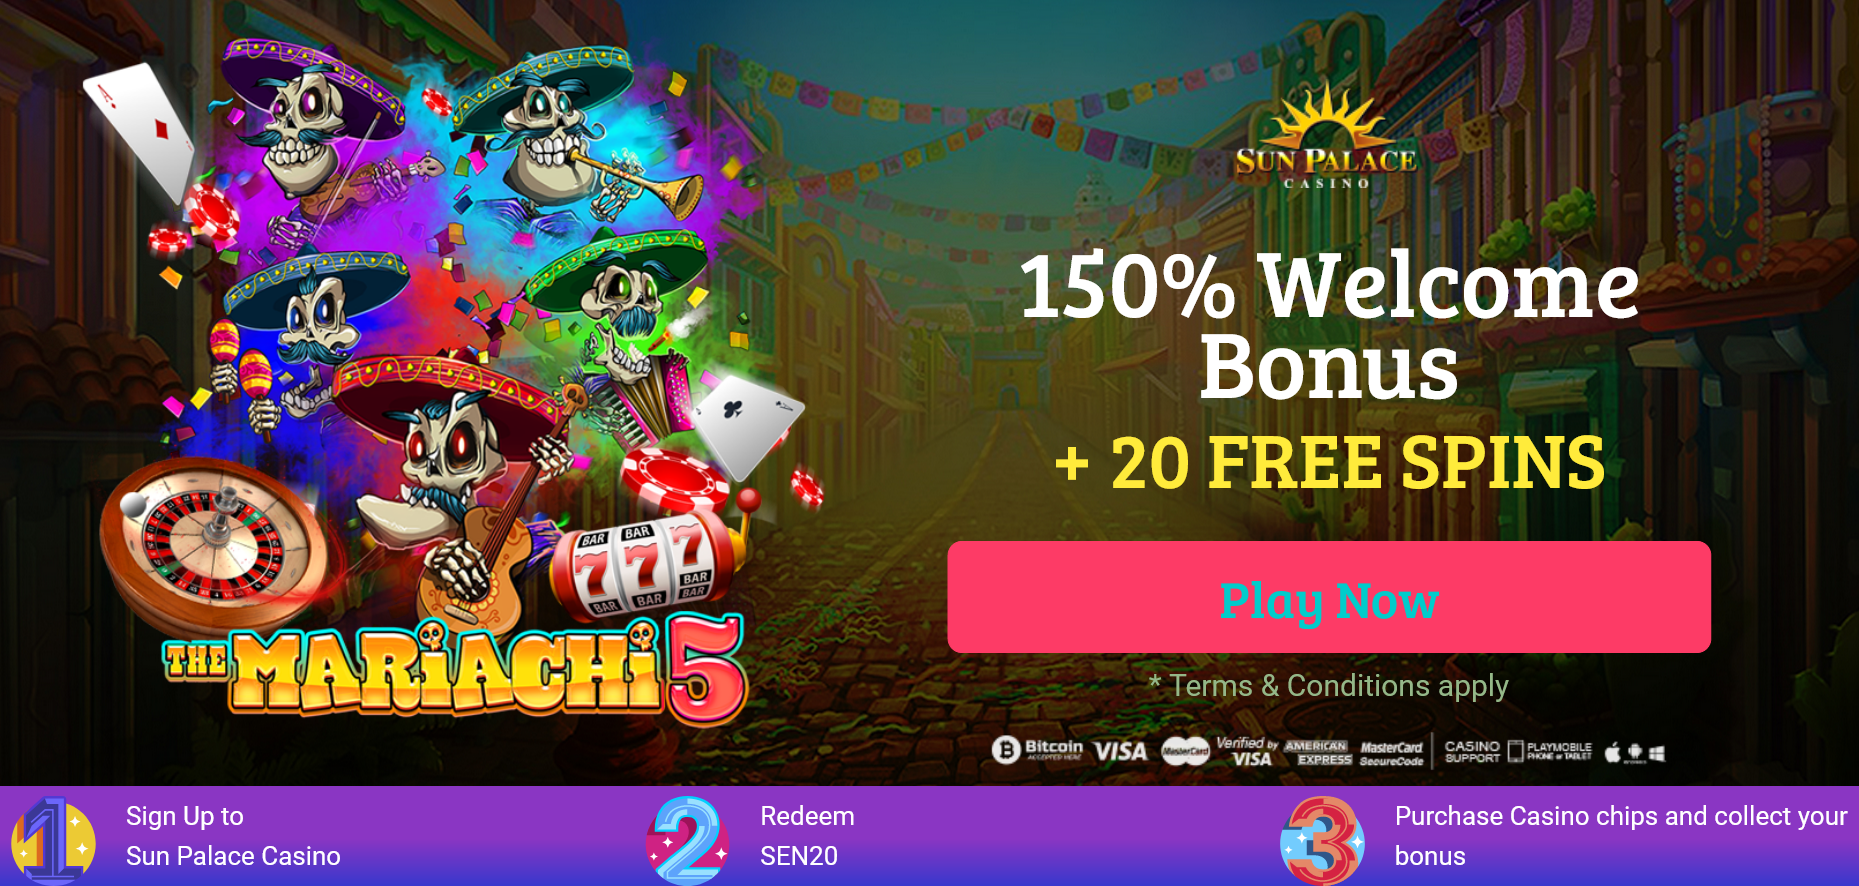 Sun Palace Casino -150% WELCOME BONUS + 20 FREE SPINS